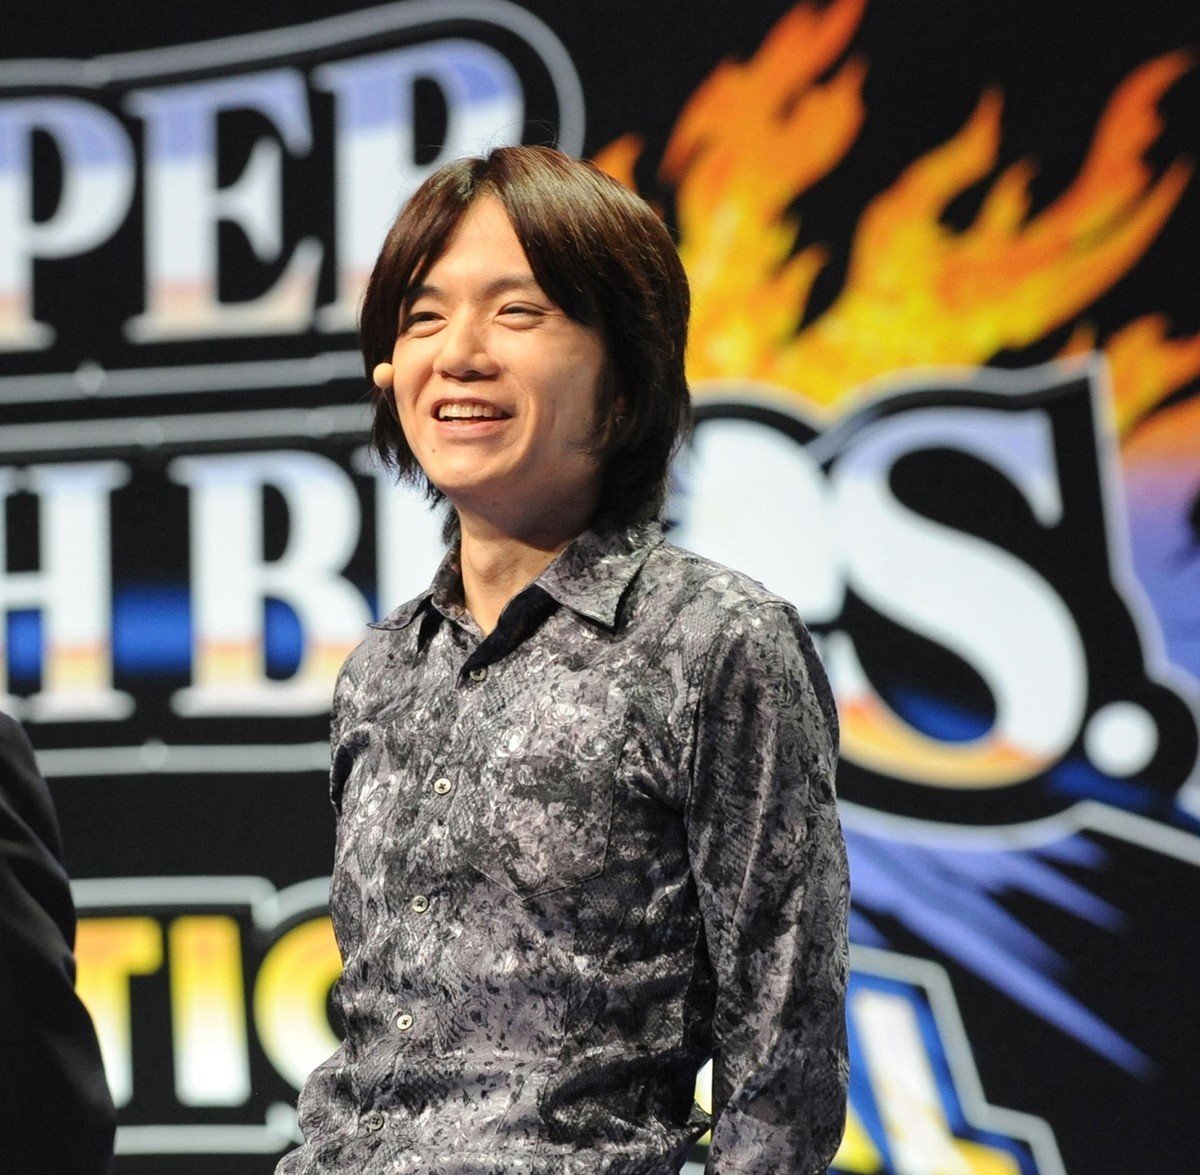 Masahiro Sakurai at the 'Super Smash Bros.' Invitational tournament at E3